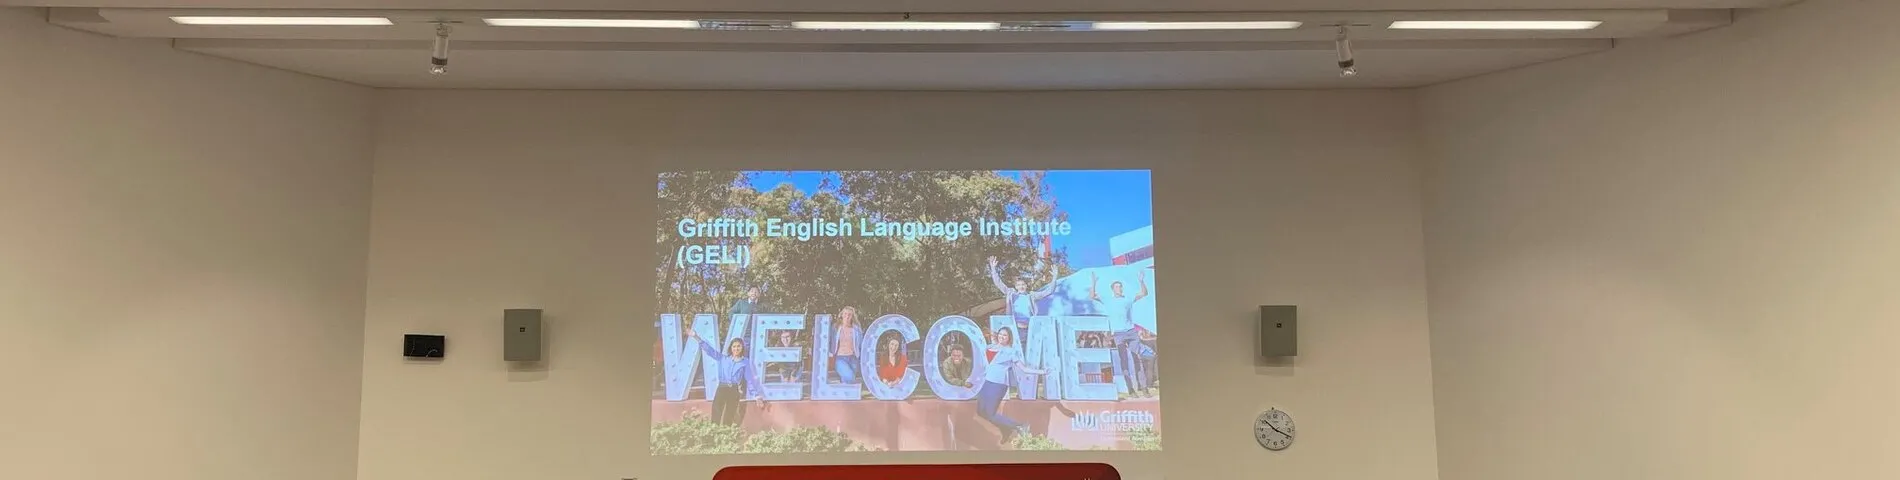 Imatge 1 de l'escola Griffith English Language Institute